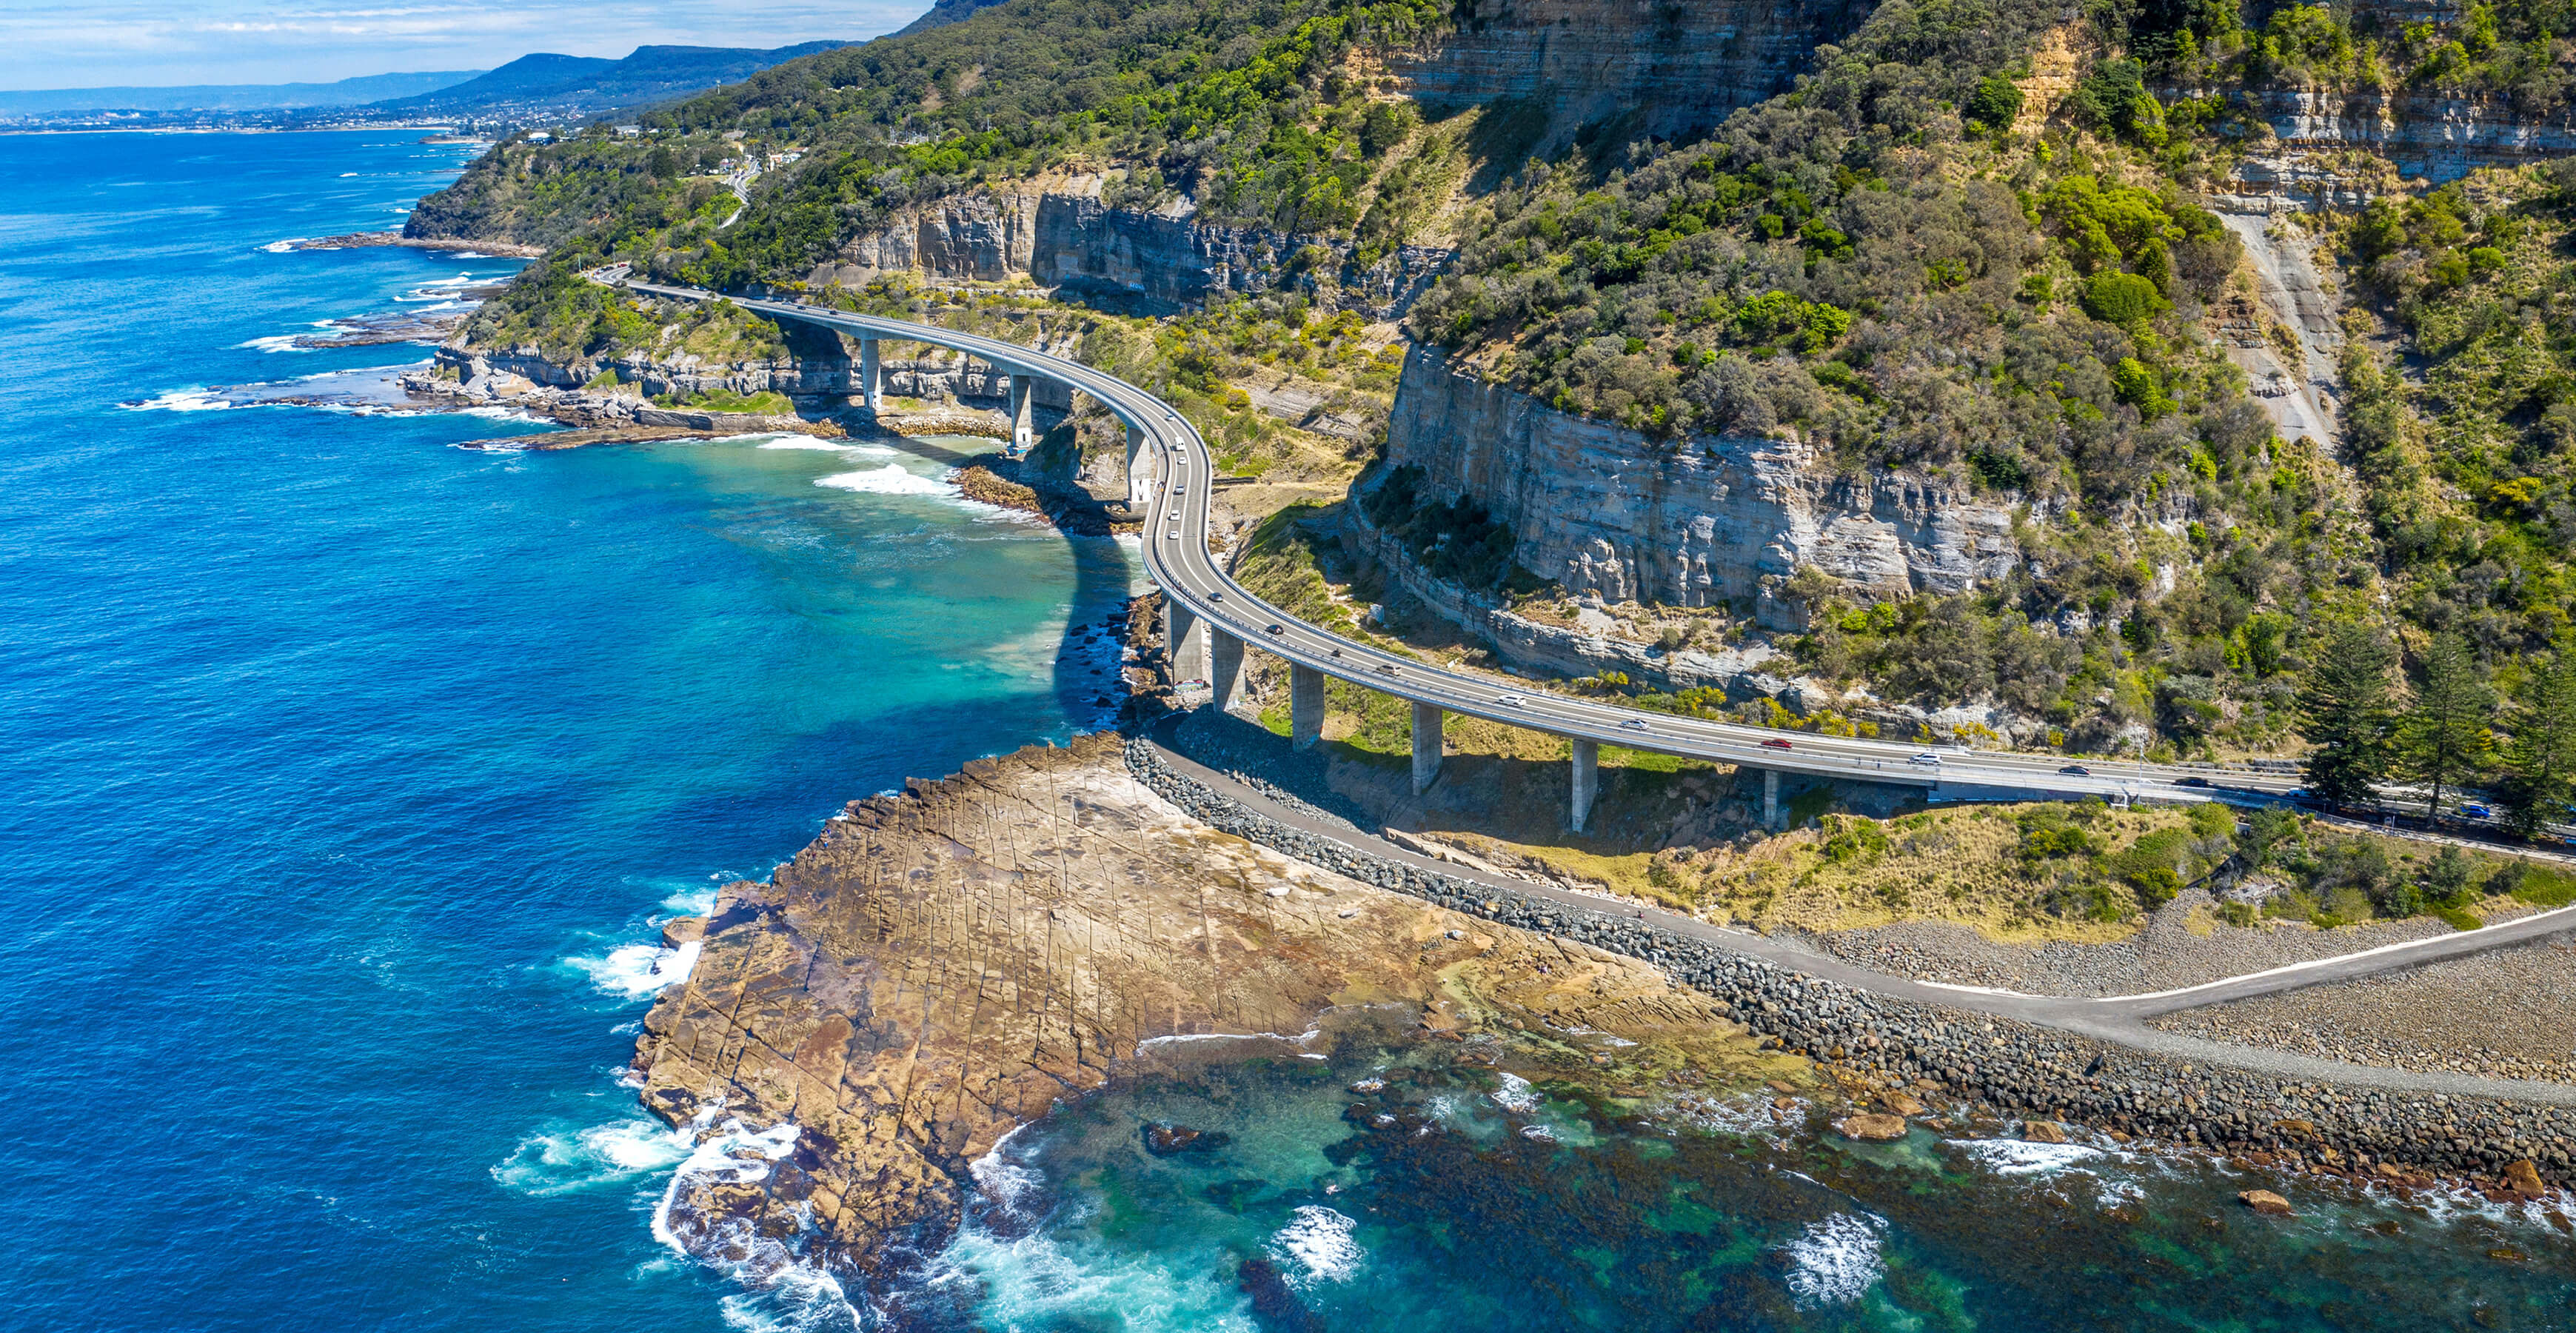 View of a curvy part of a scenic sea cliff bridge